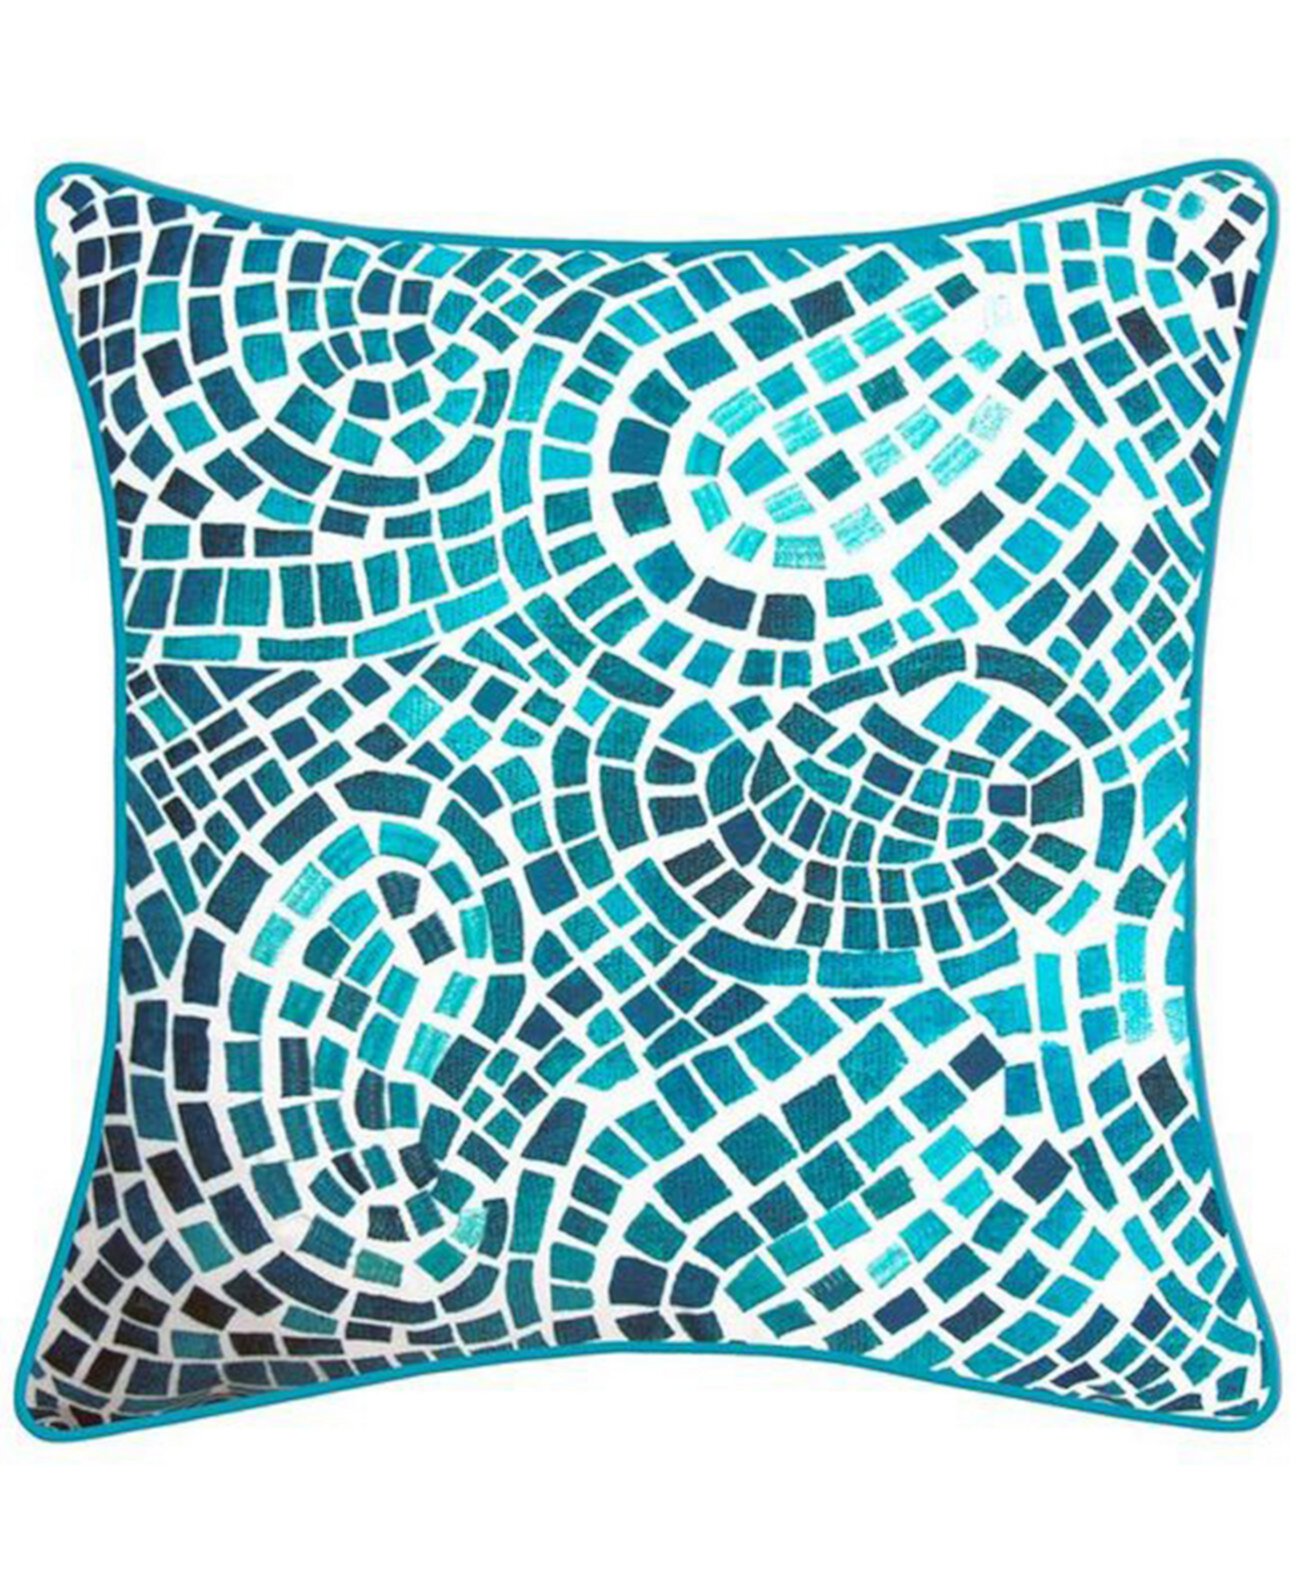 NYBG Внутренняя, наружная декоративная подушка с вышивкой мозаикой, 20 x 20 дюймов Edie@Home